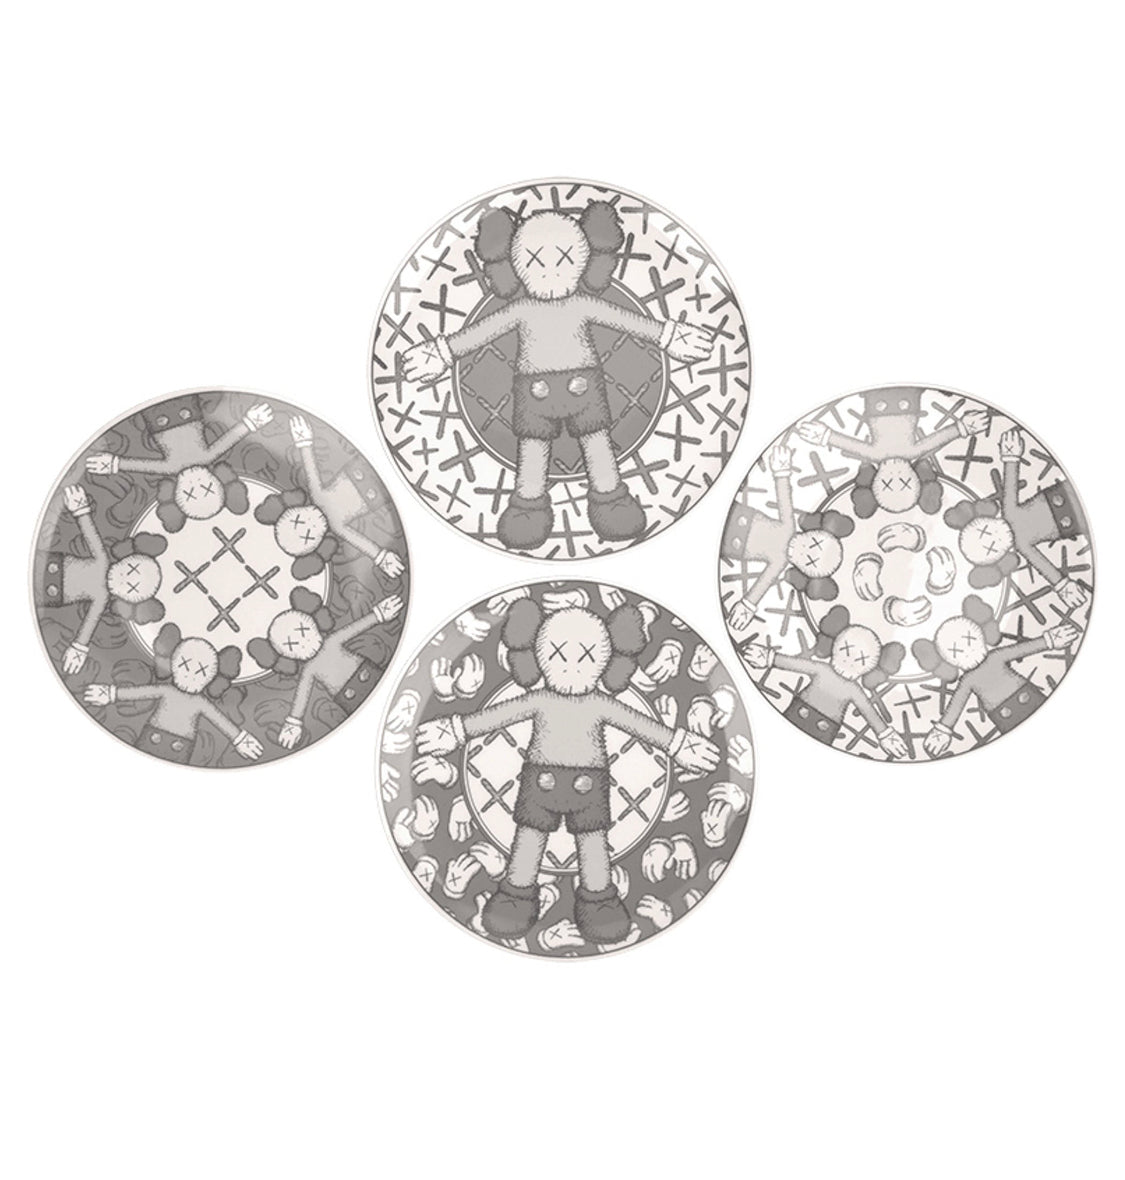 KAWS - Ceramic Plate Set (Grey) (Set of 4), 2019